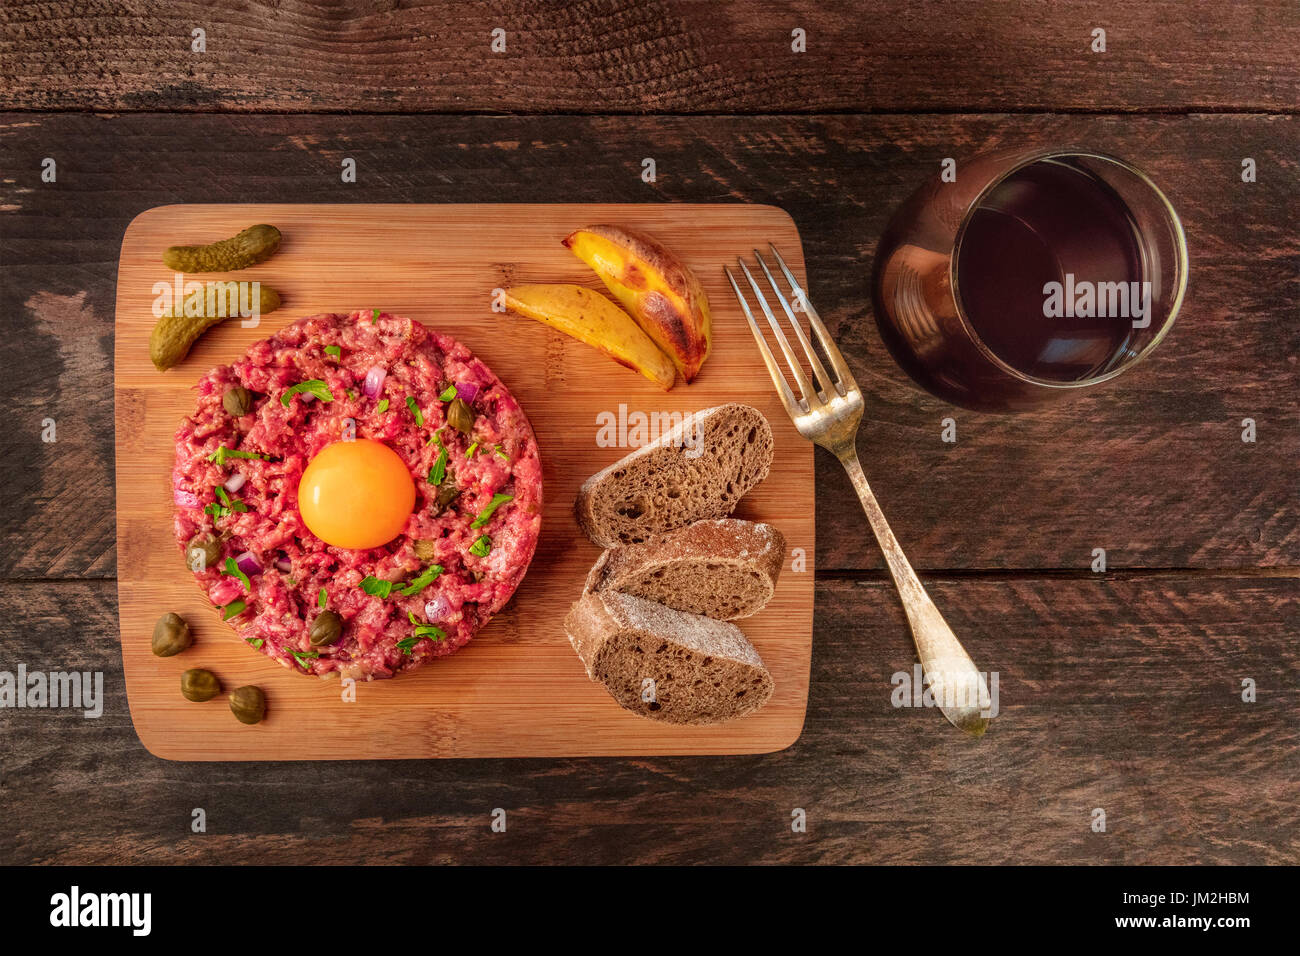 Steak tartare with garnish, red wine, and copyspace Stock Photo - Alamy